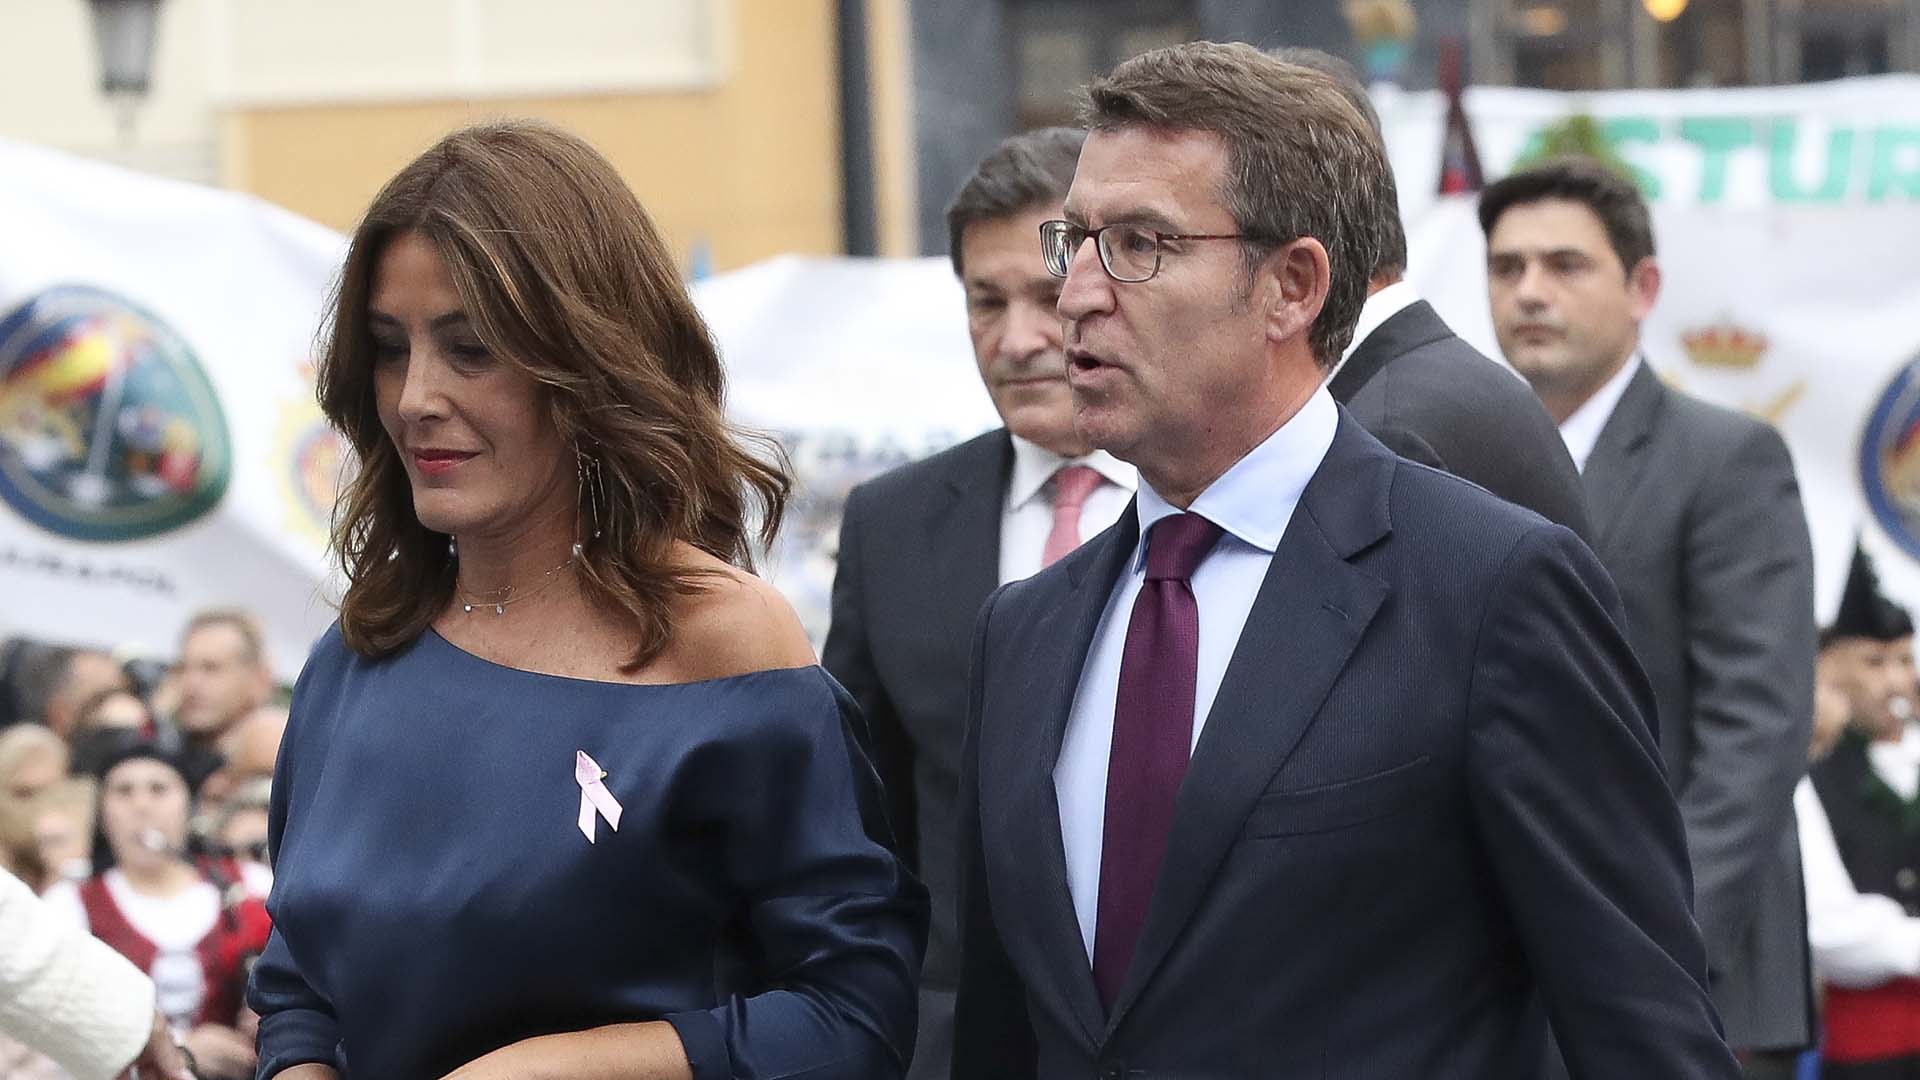 Politician Alberto NuÃ±ez Feijoo and Eva Cardenas during the Princess of Asturias Awards 2018 in Oviedo, on Friday 19 October 2018